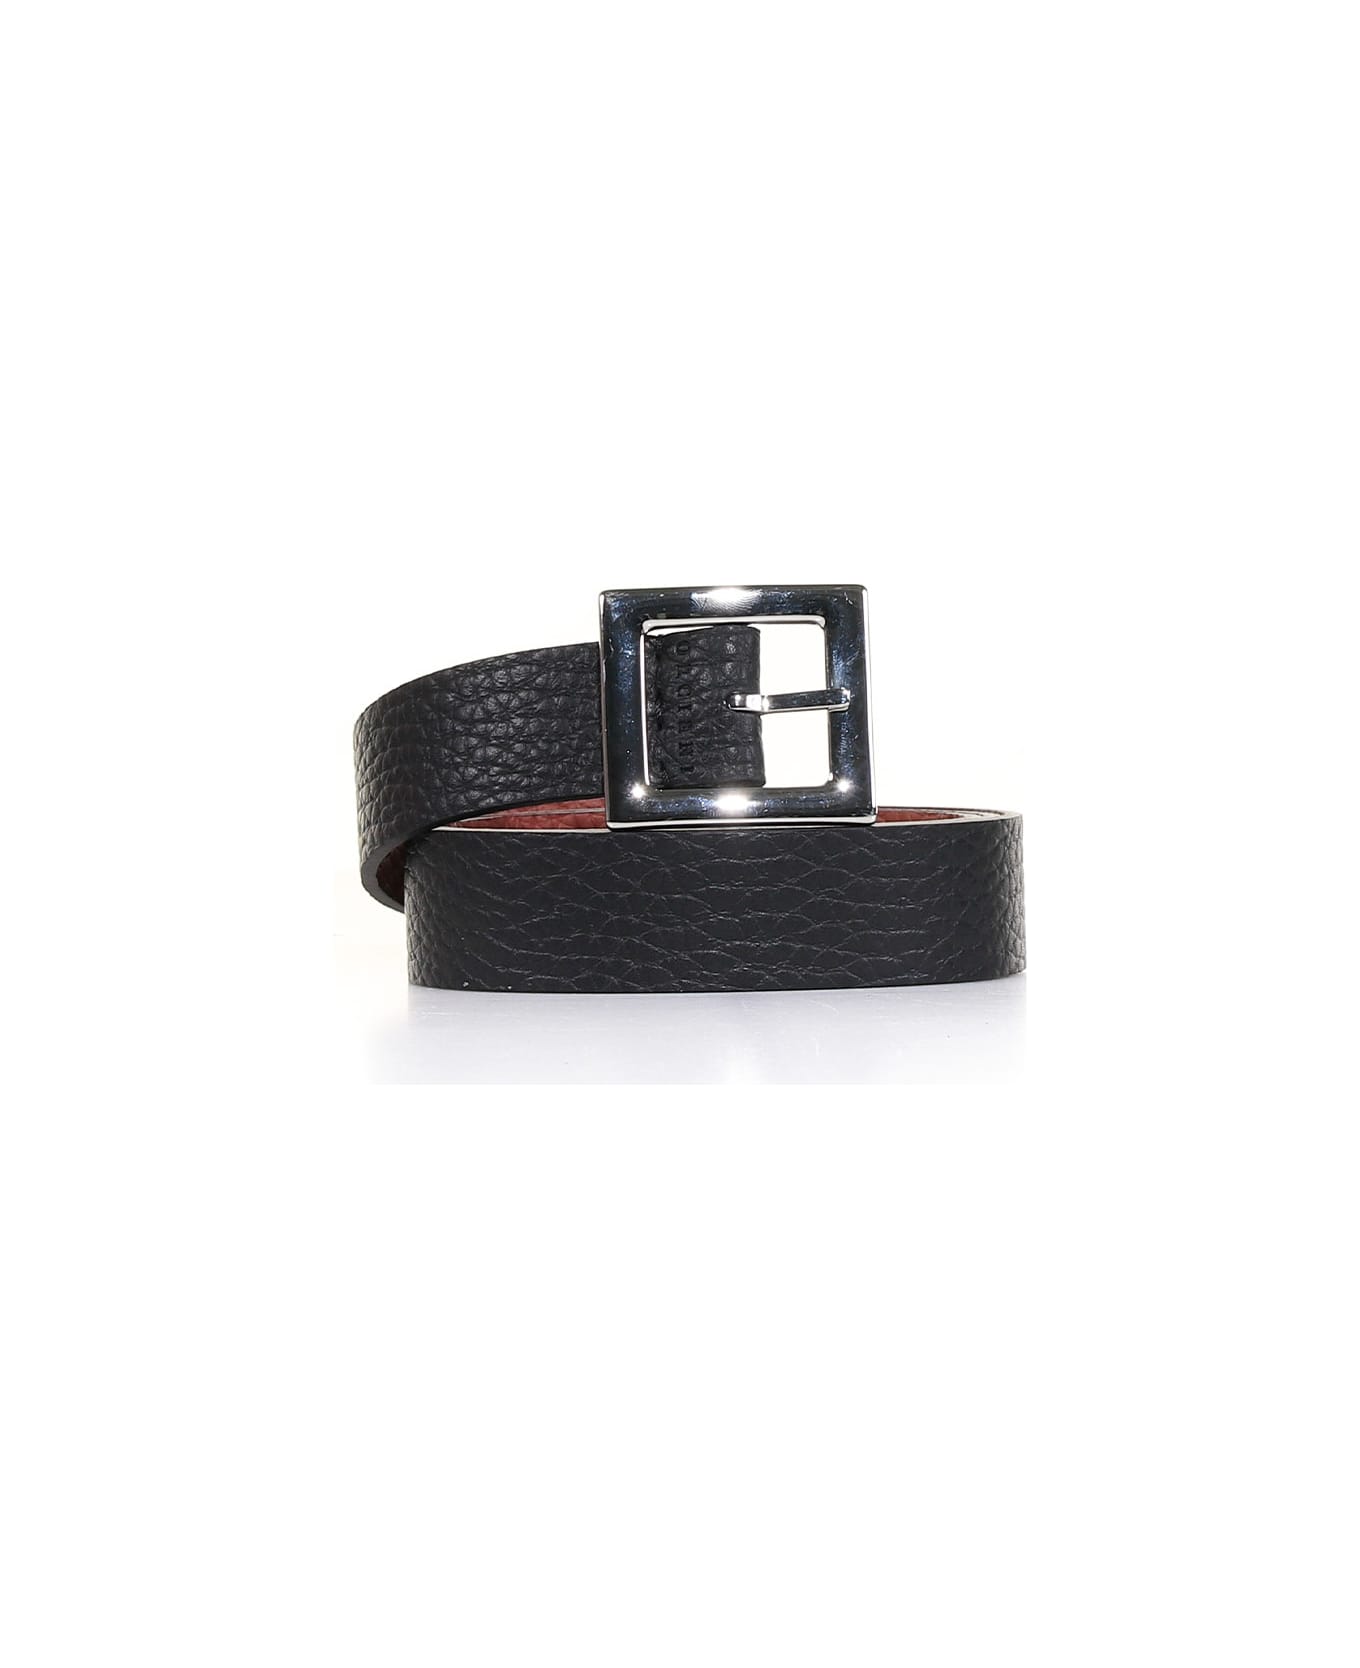 Orciani Leather Belt - NERO TABACCO ベルト